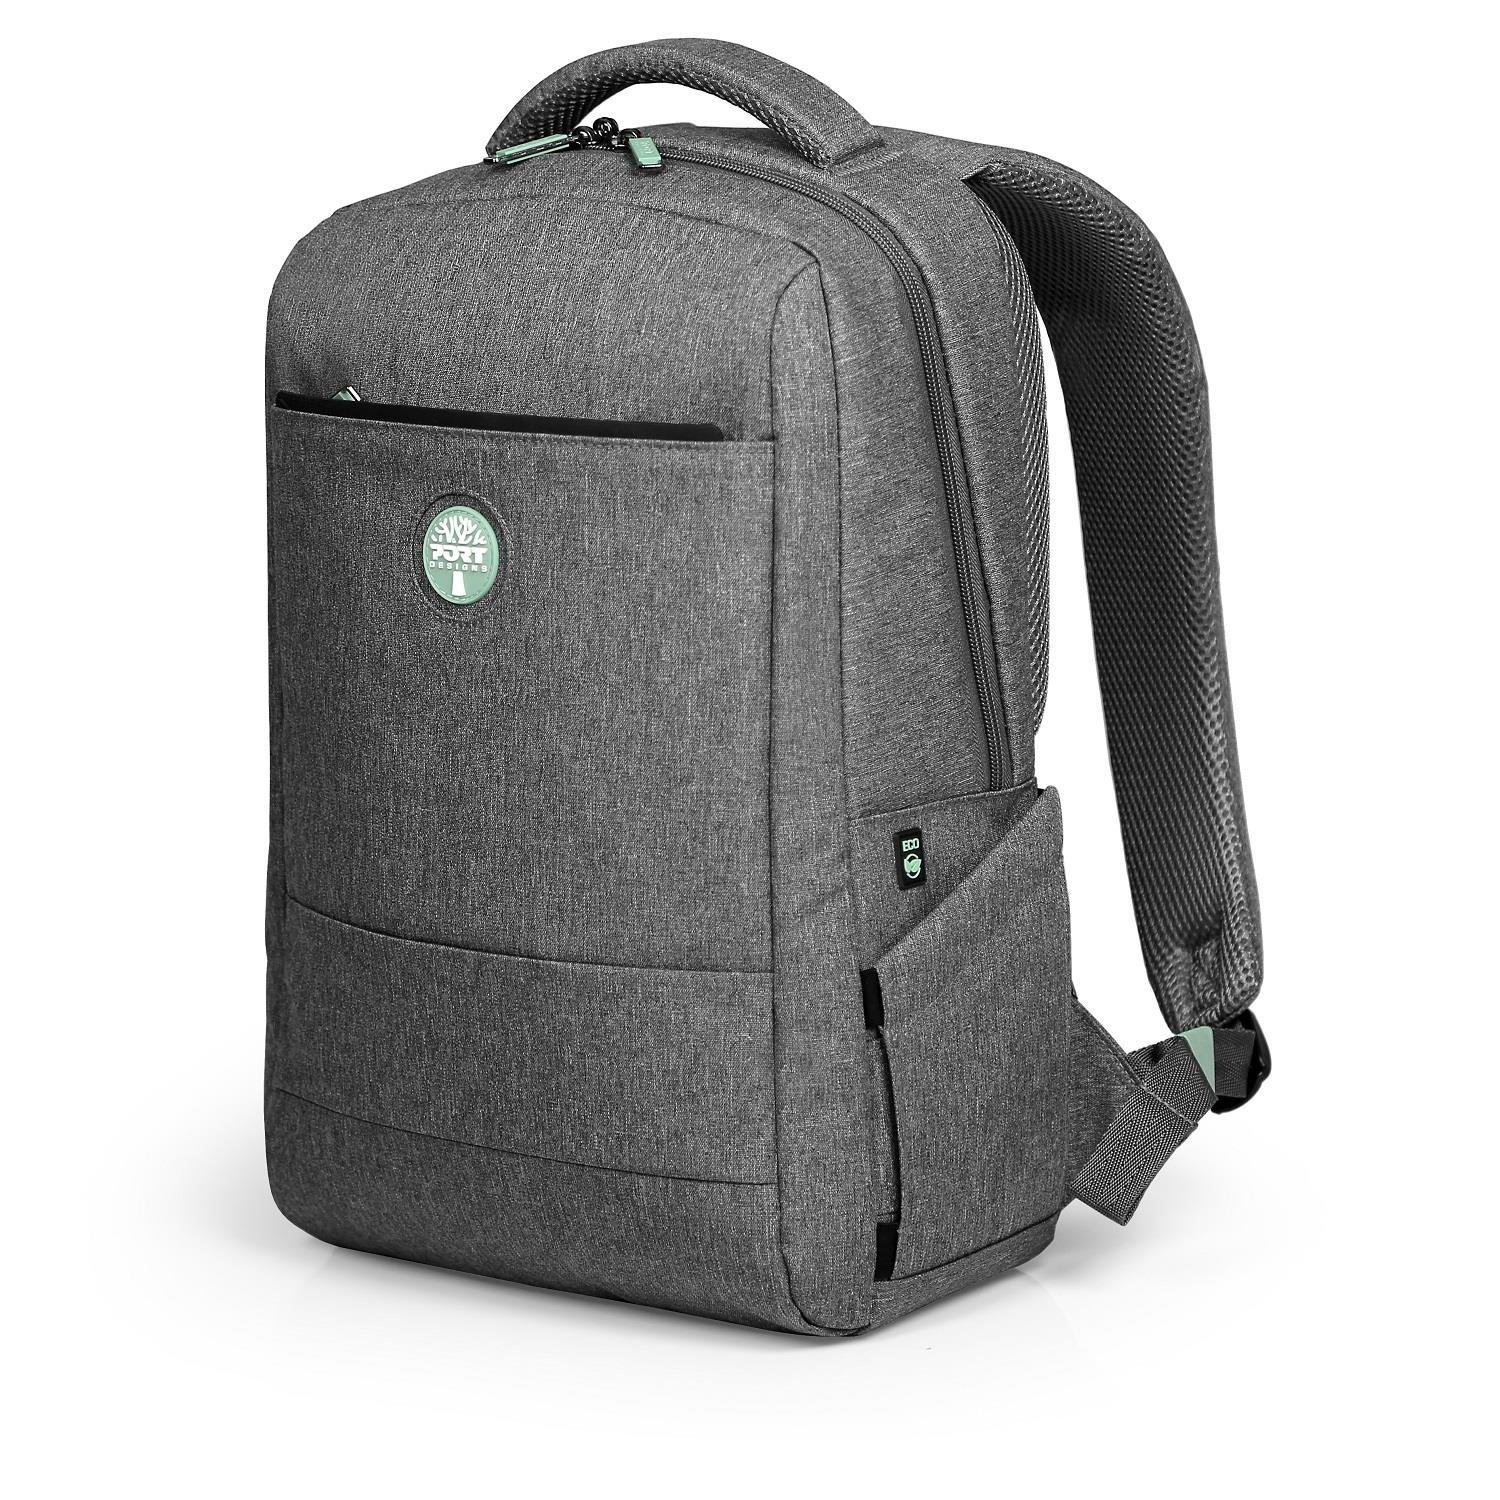 Port Designs Yosemite Eco 15.6 Inch Laptop Backpack - Grey